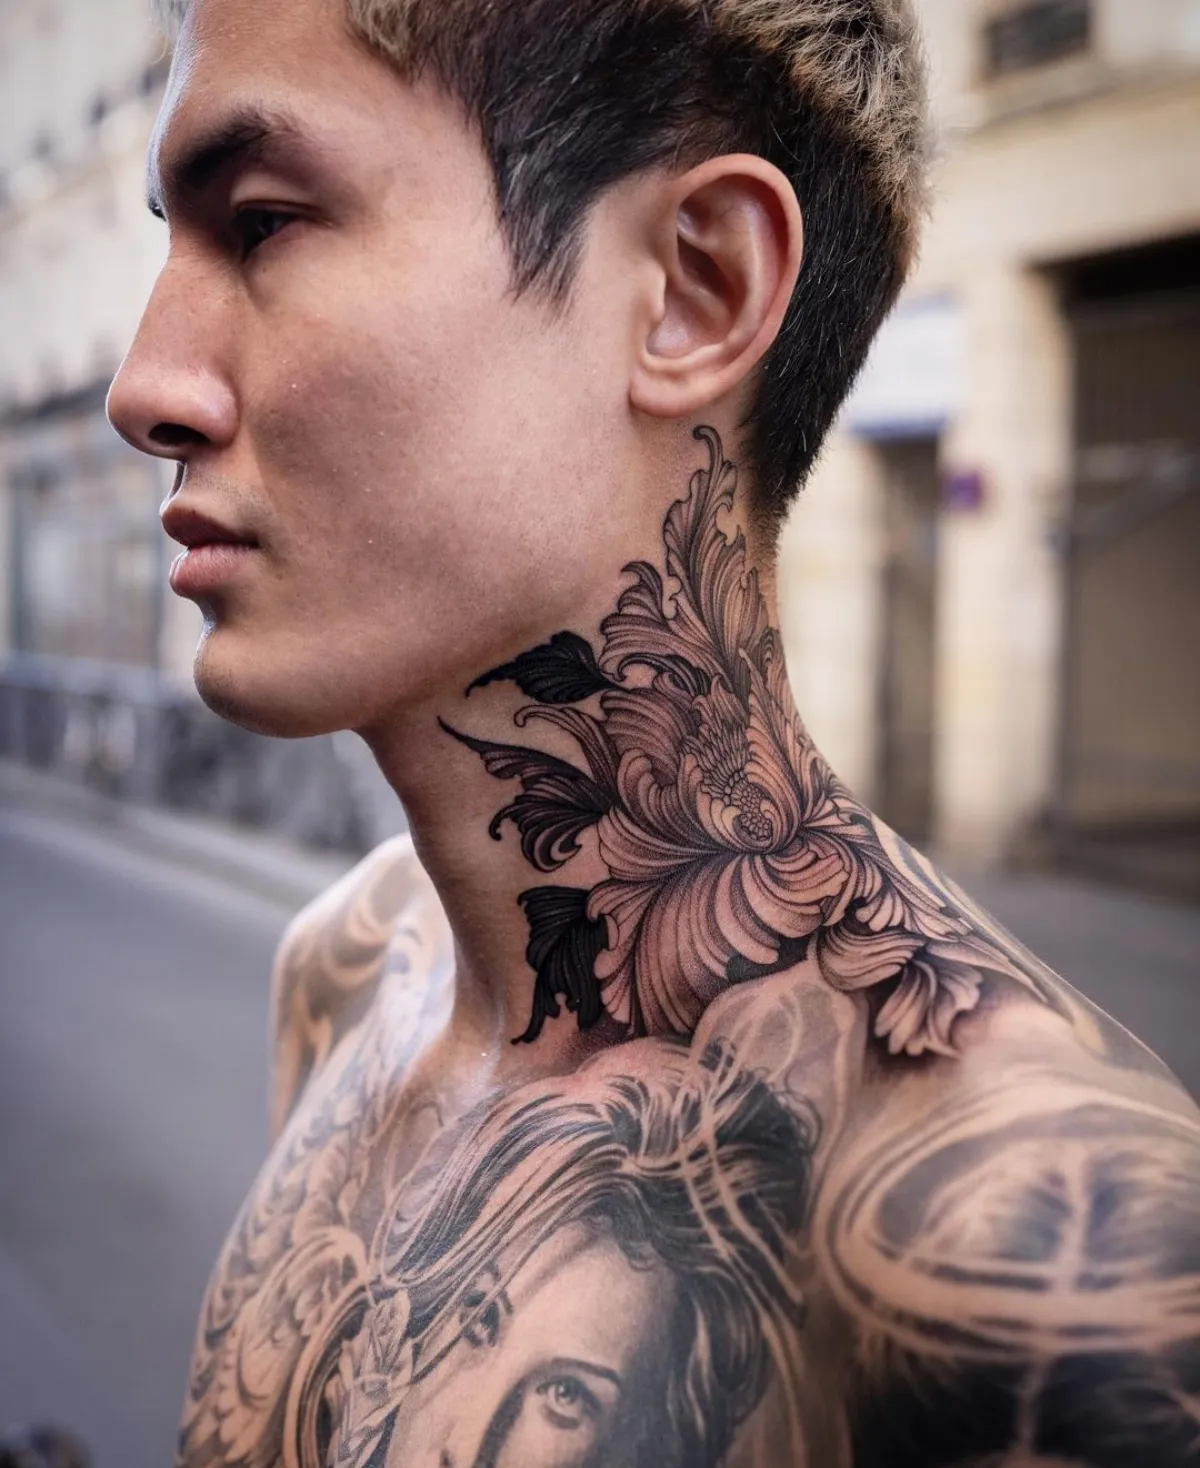 blumen tattoo am nacken frauengesicht an brust